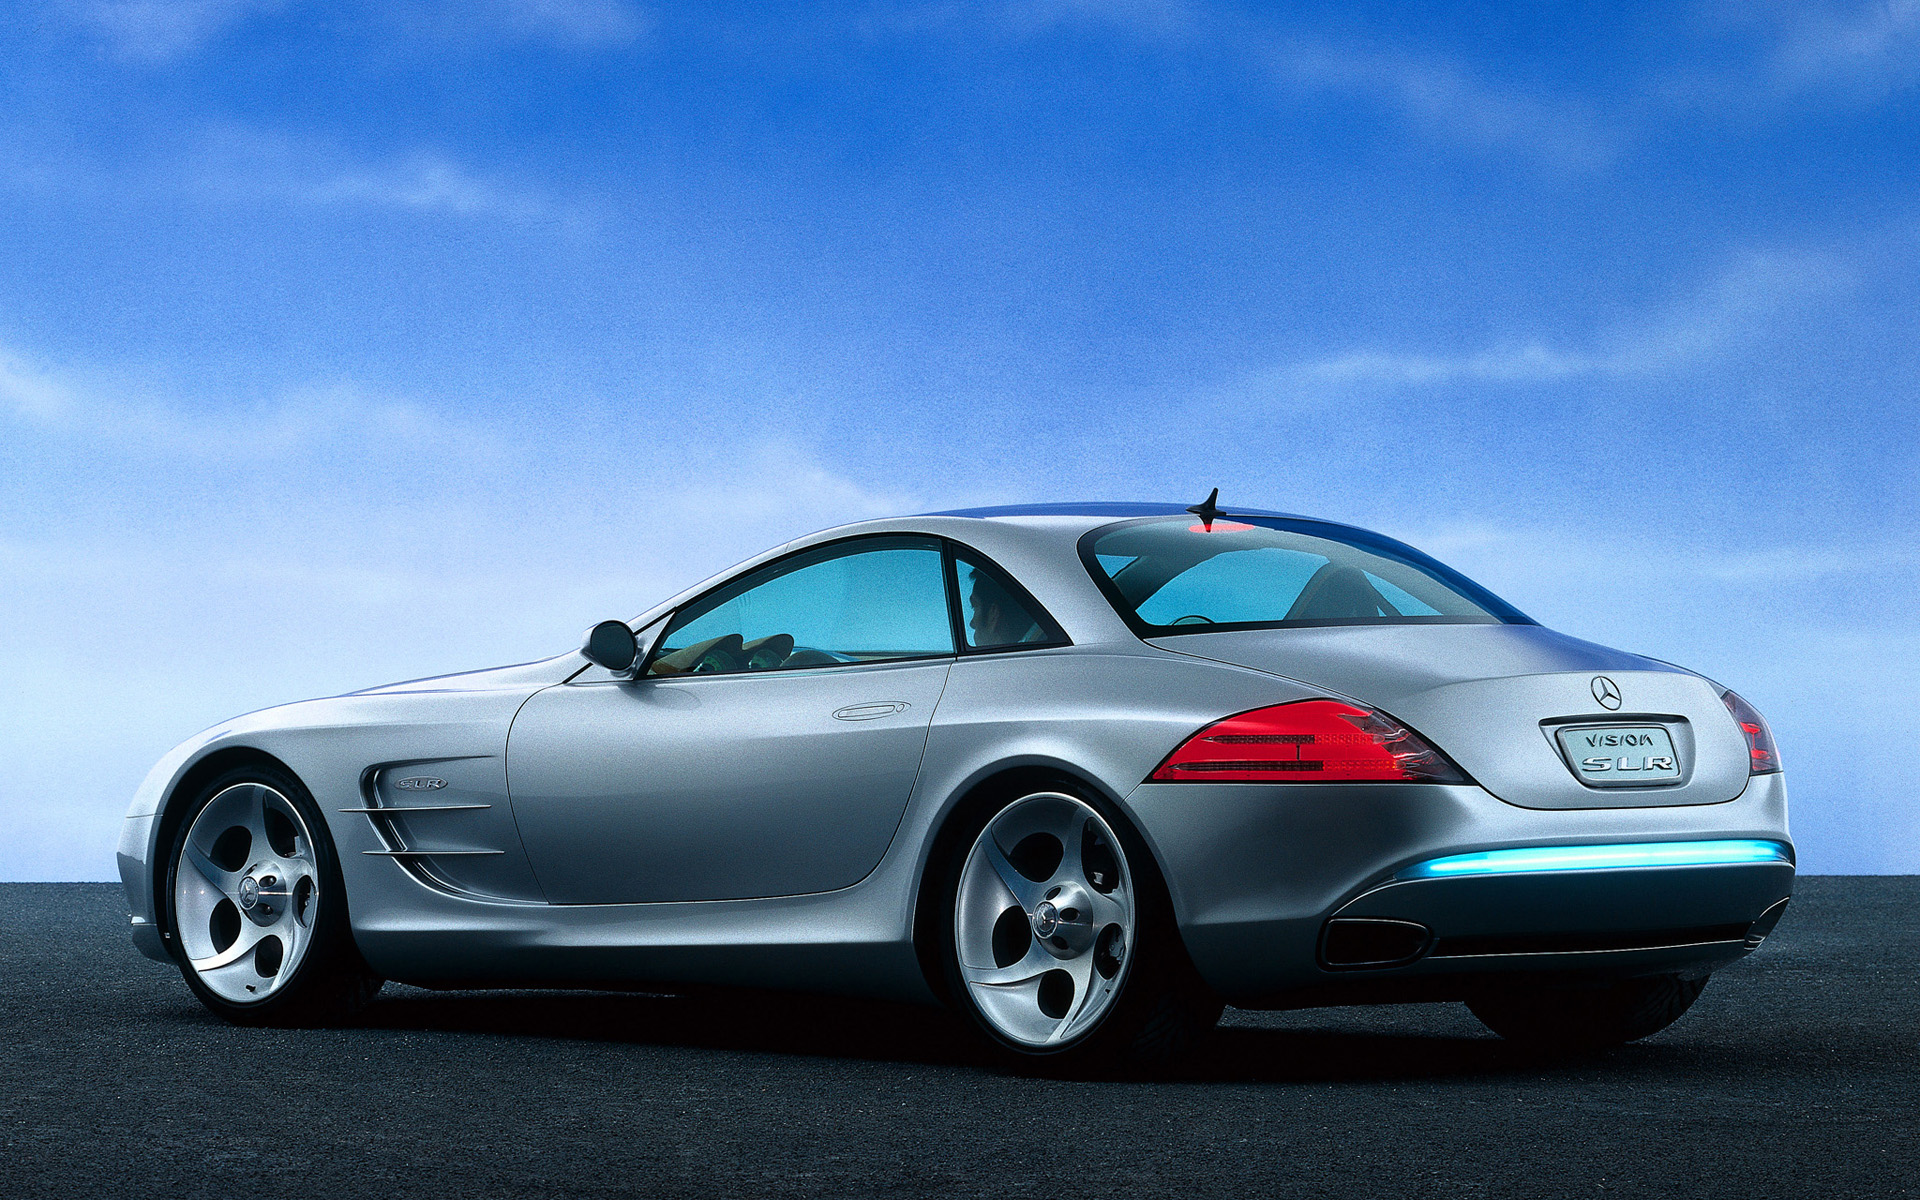  1999 Mercedes-Benz Vision SLR Concept Wallpaper.